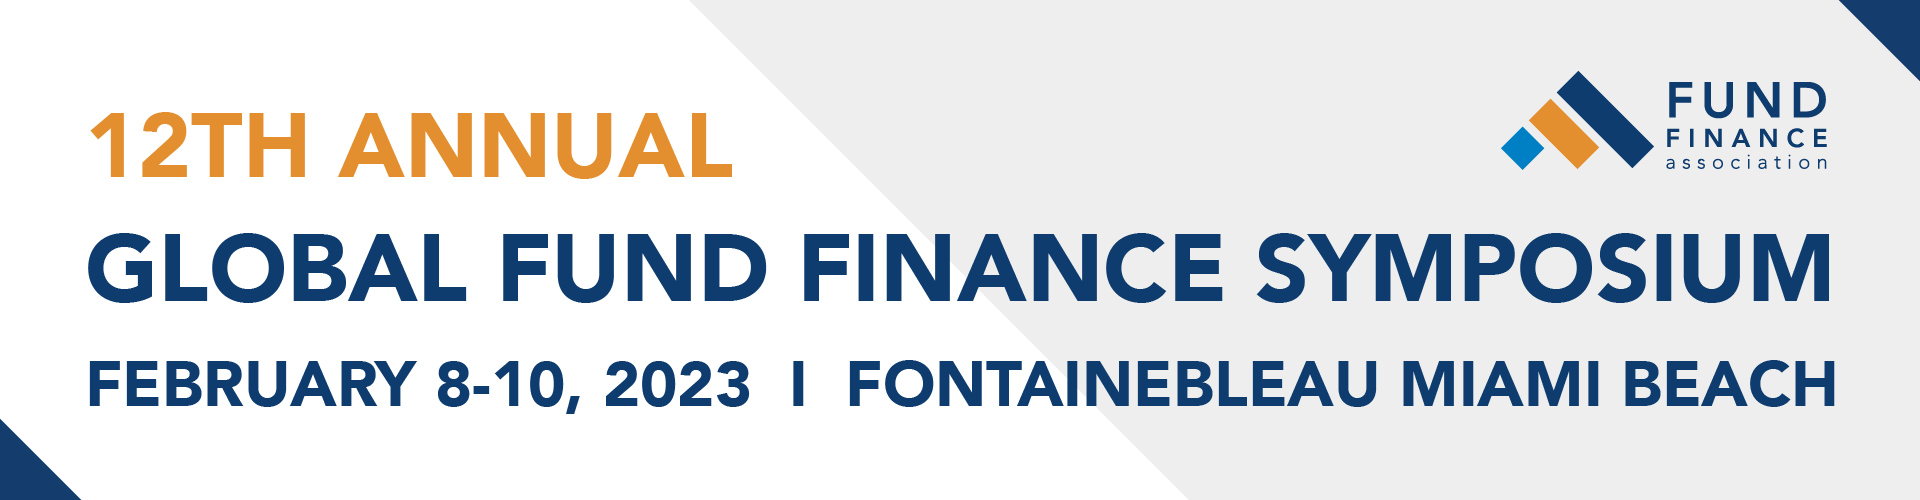 2023 Global Fund Finance Symposium